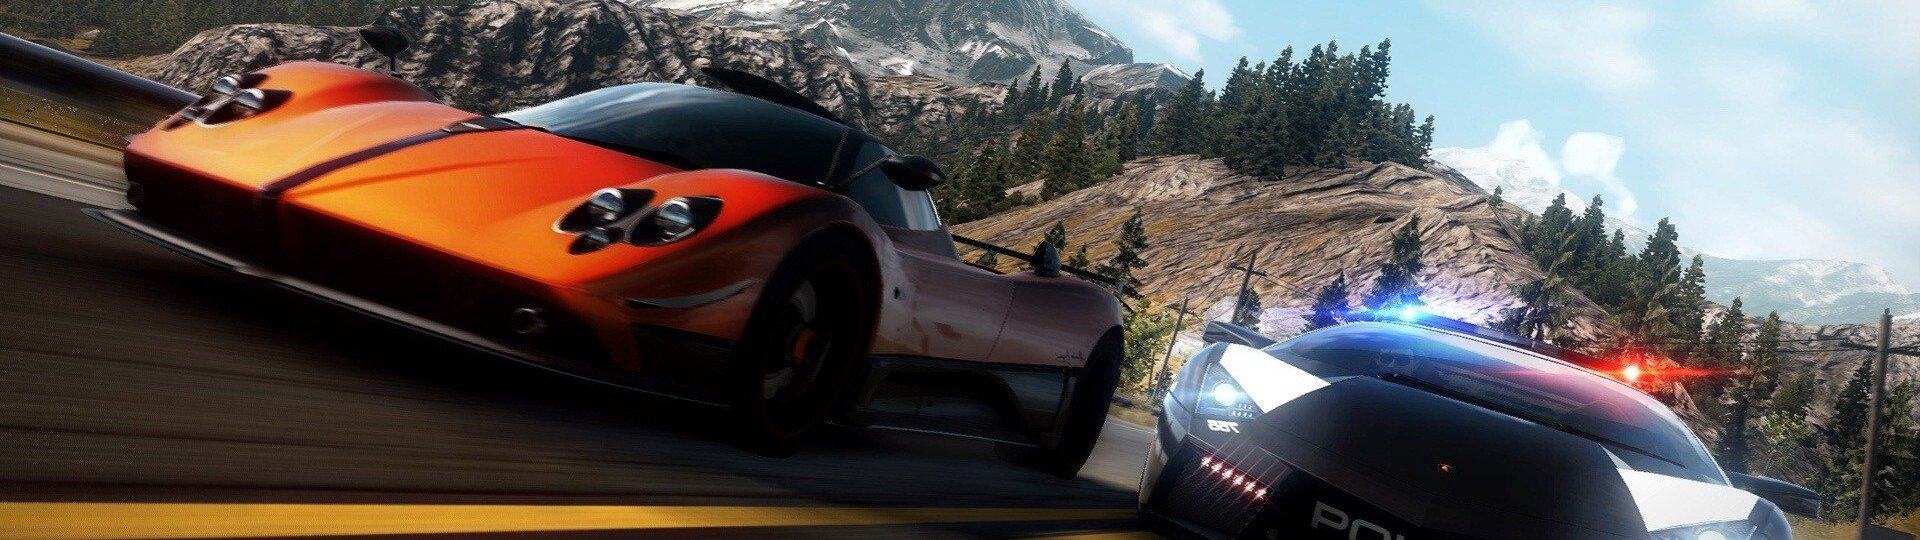 Remaster Need for Speed Hot Pursuit potvrzen? | Spekulace